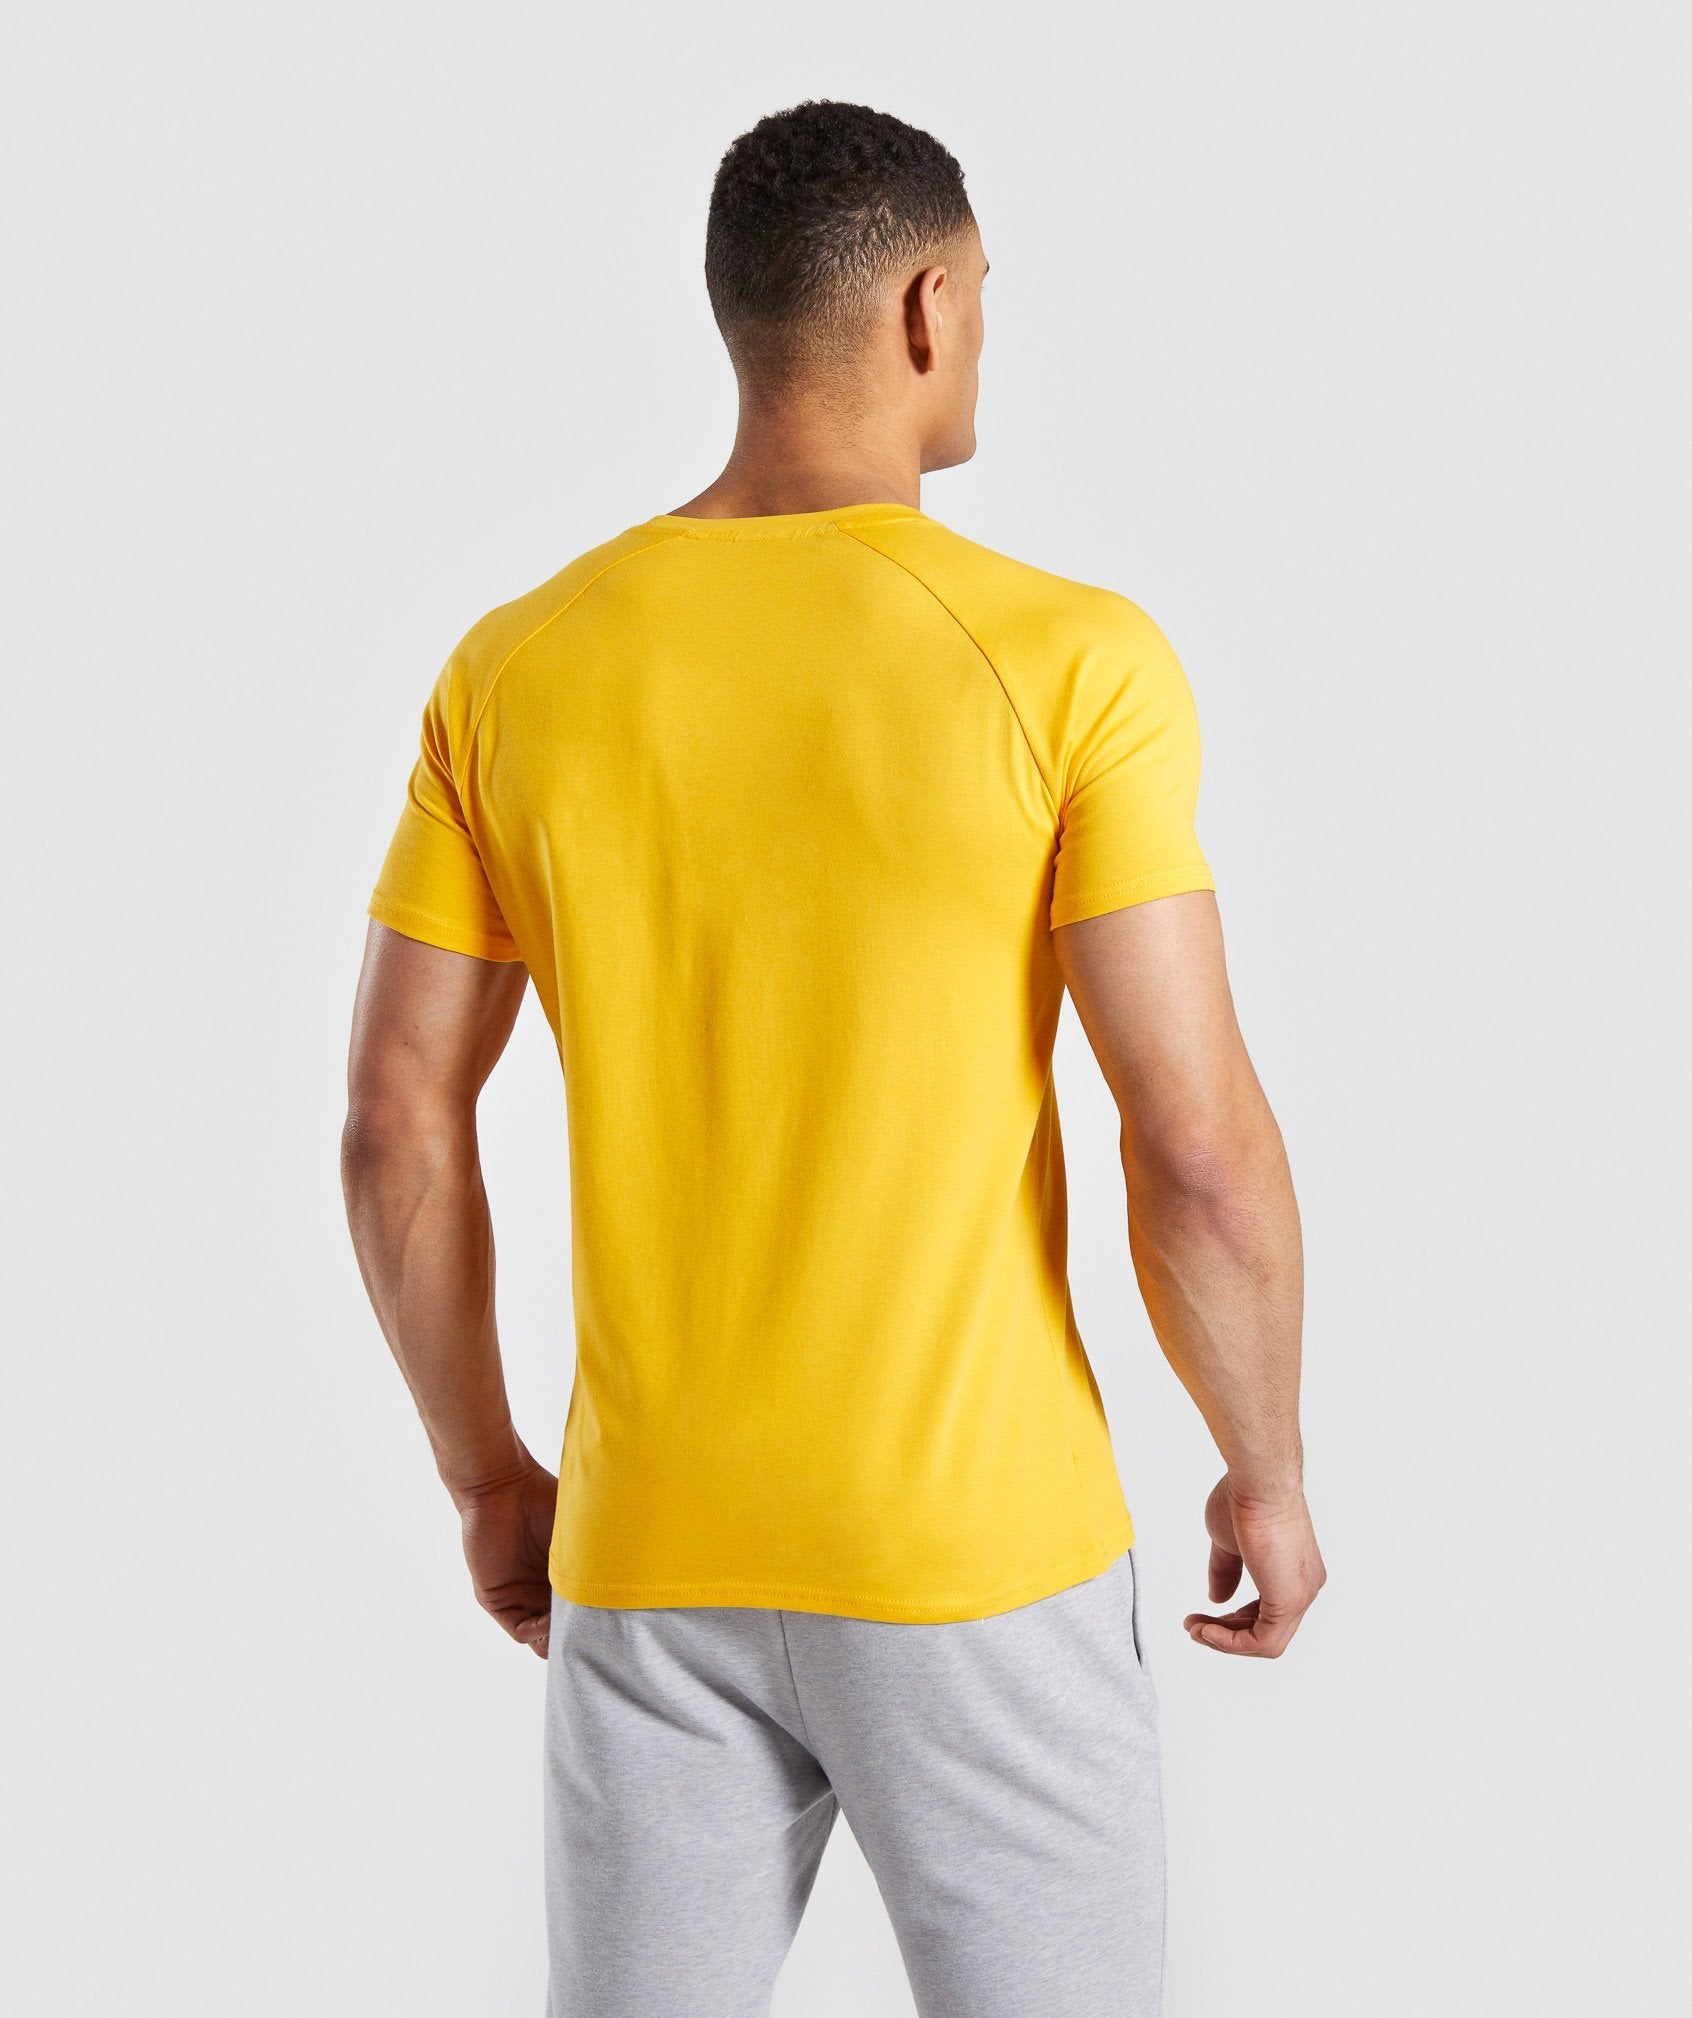 Apollo T-Shirt in Yellow - view 2